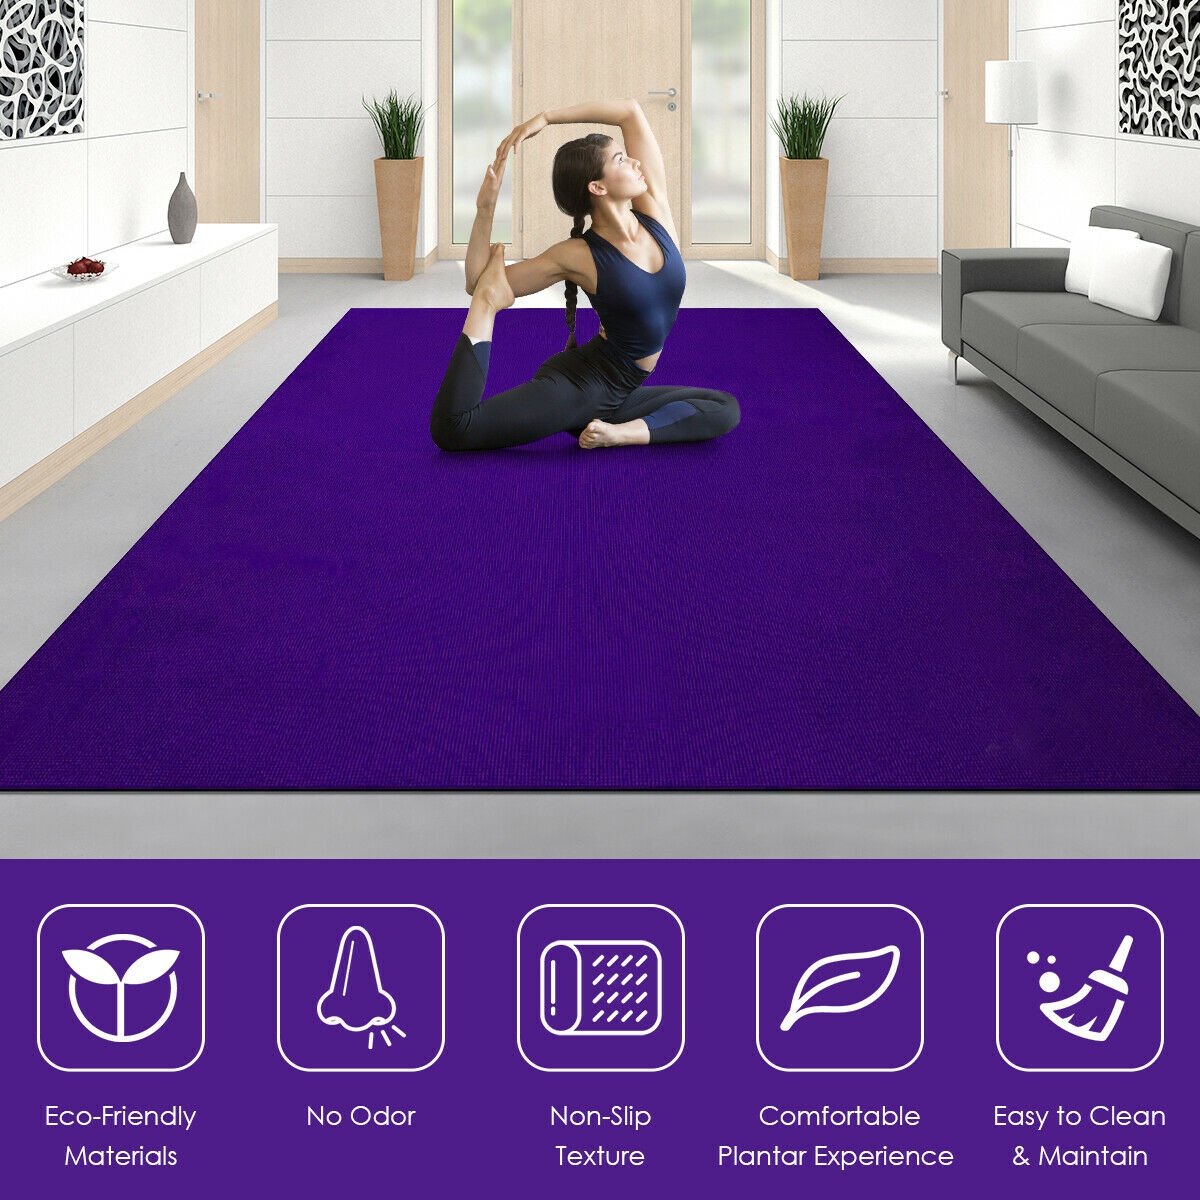 6 x 4 Feet Large Yoga Mat, Purple - Gallery Canada